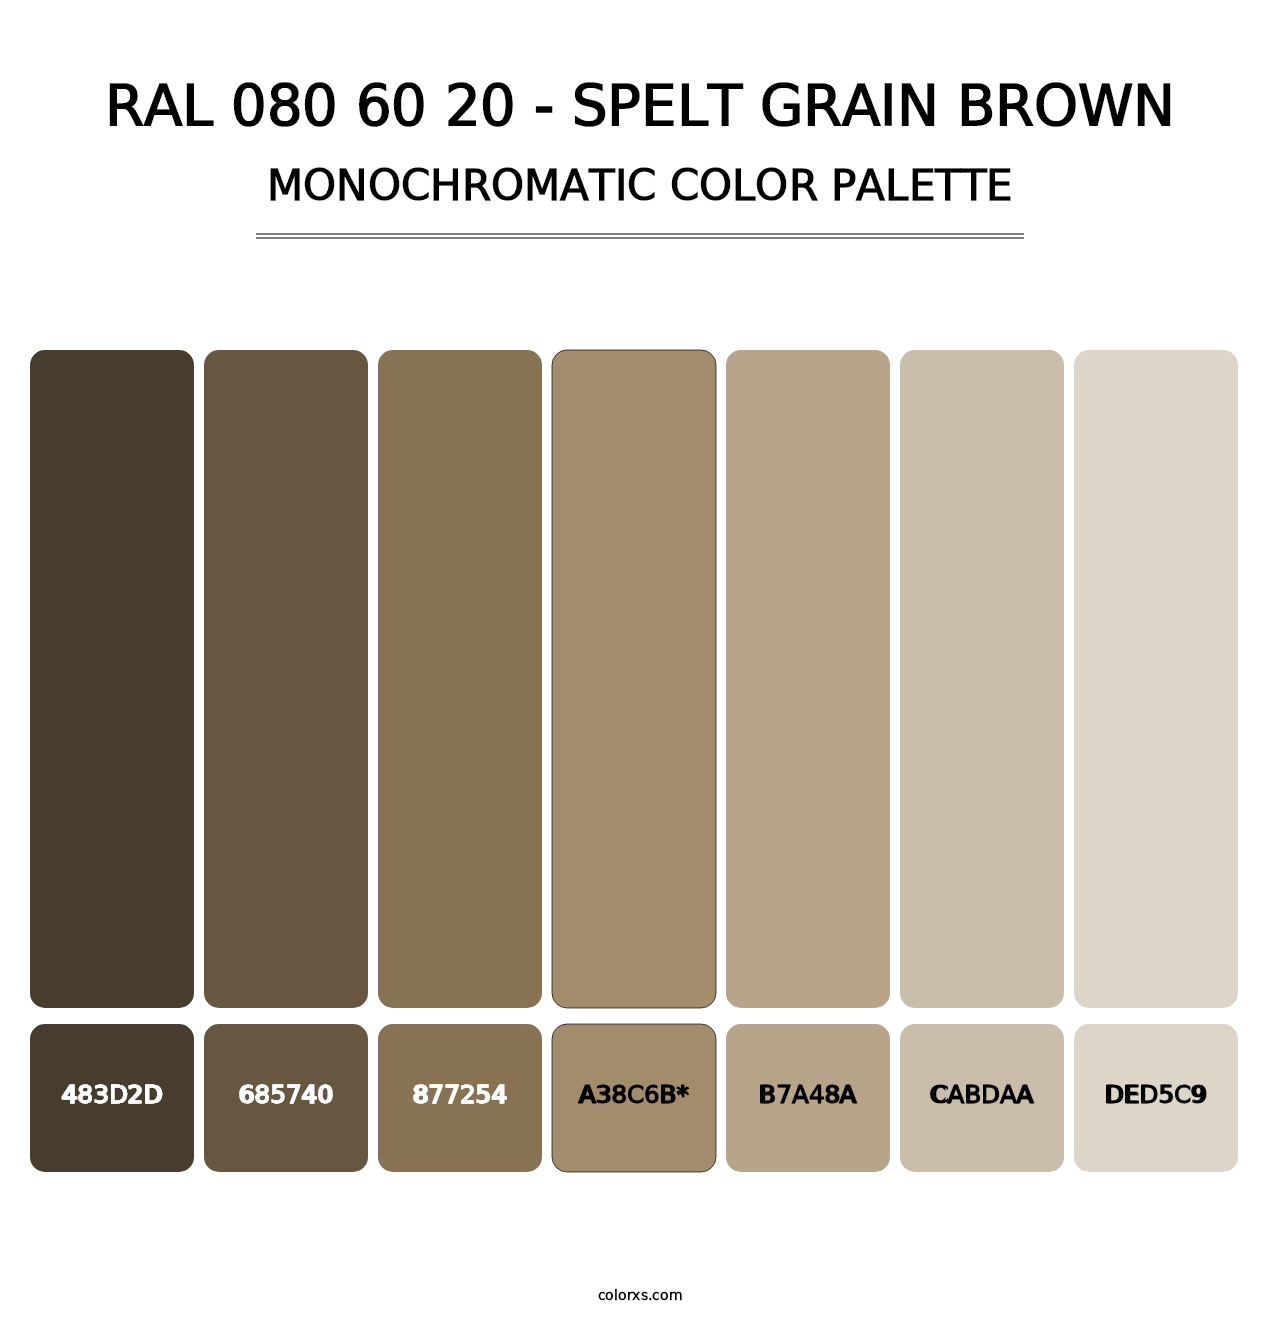 RAL 080 60 20 - Spelt Grain Brown - Monochromatic Color Palette